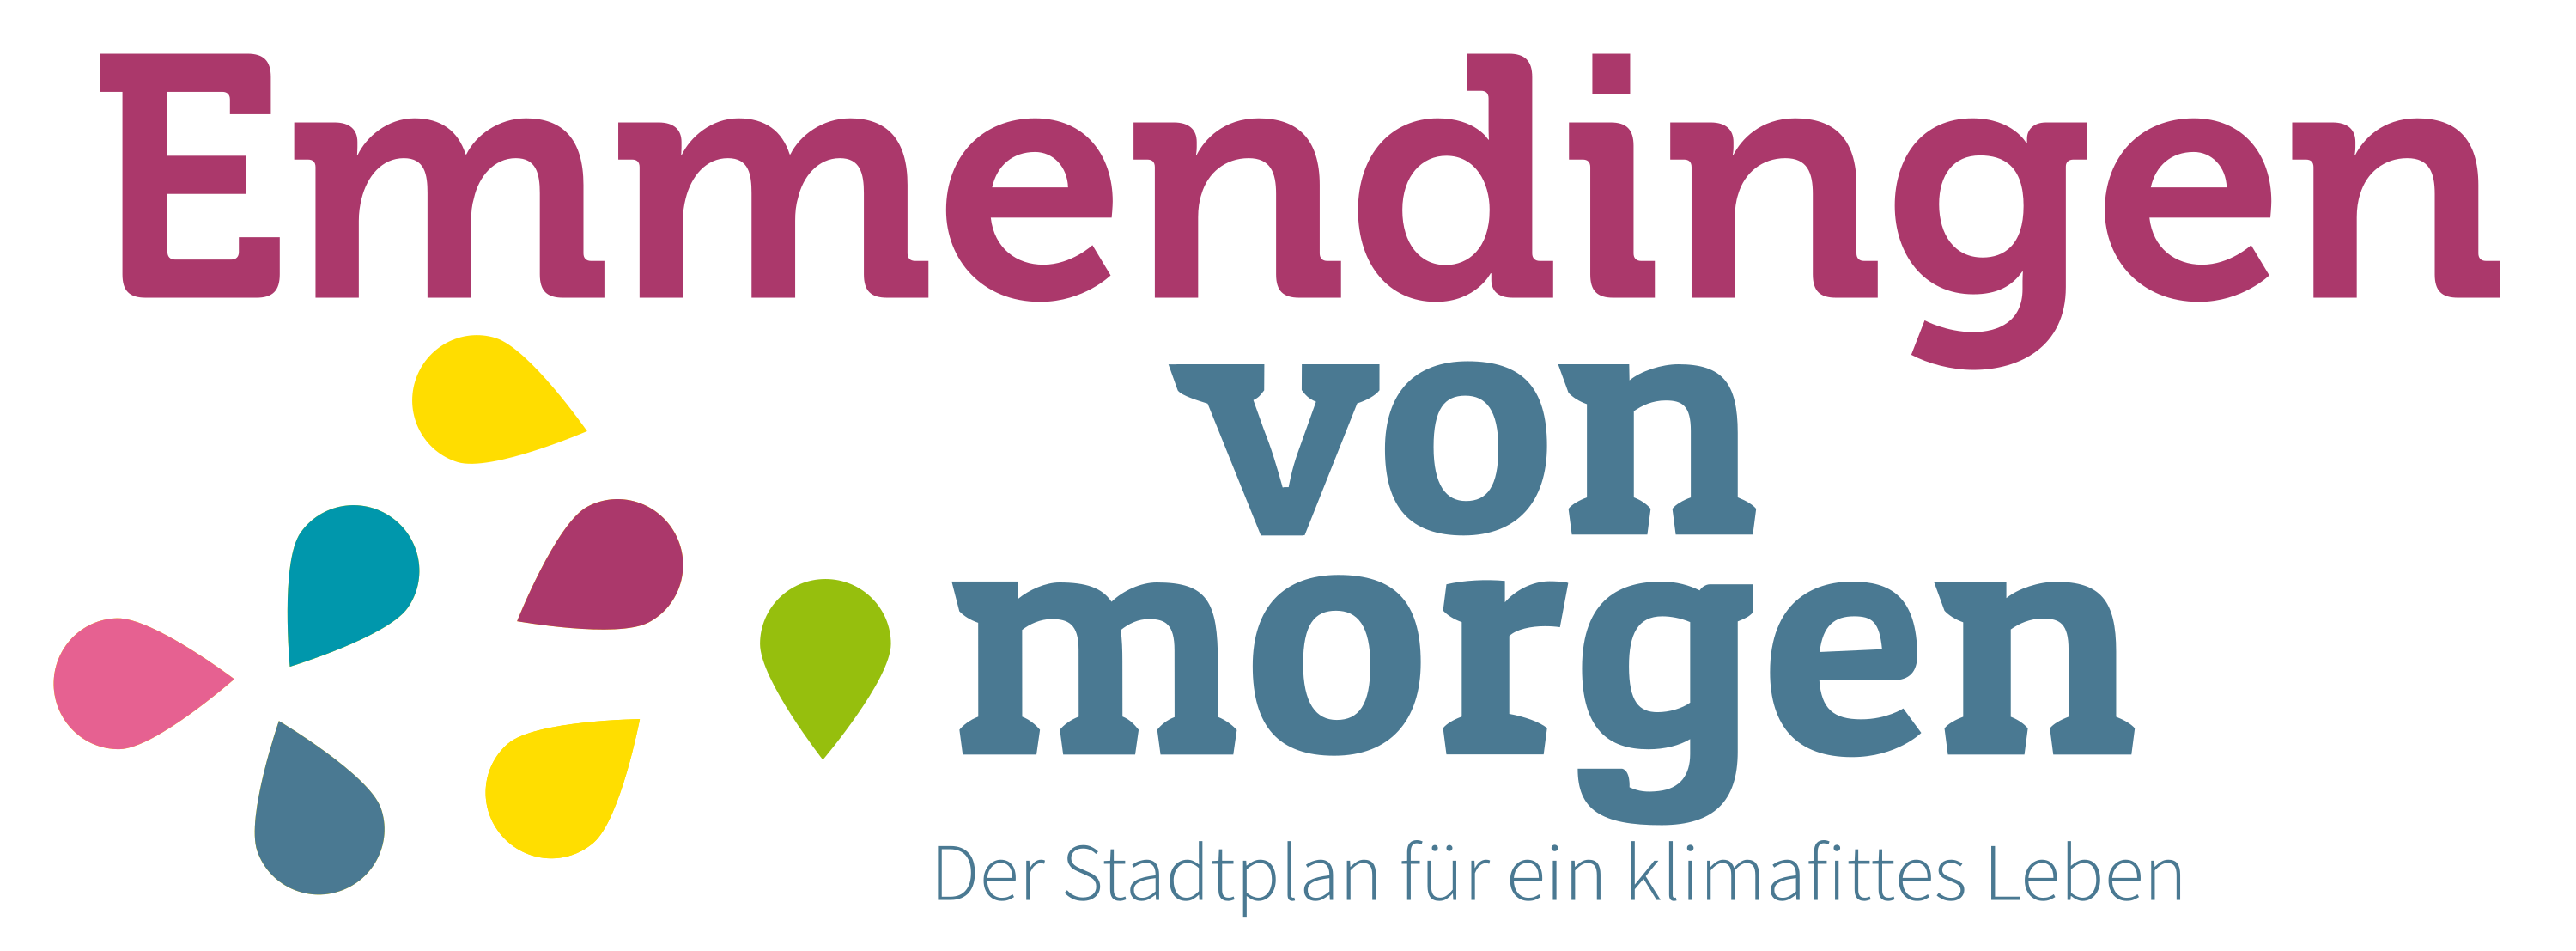 Emmendingen_vonmorgen_logo.svg